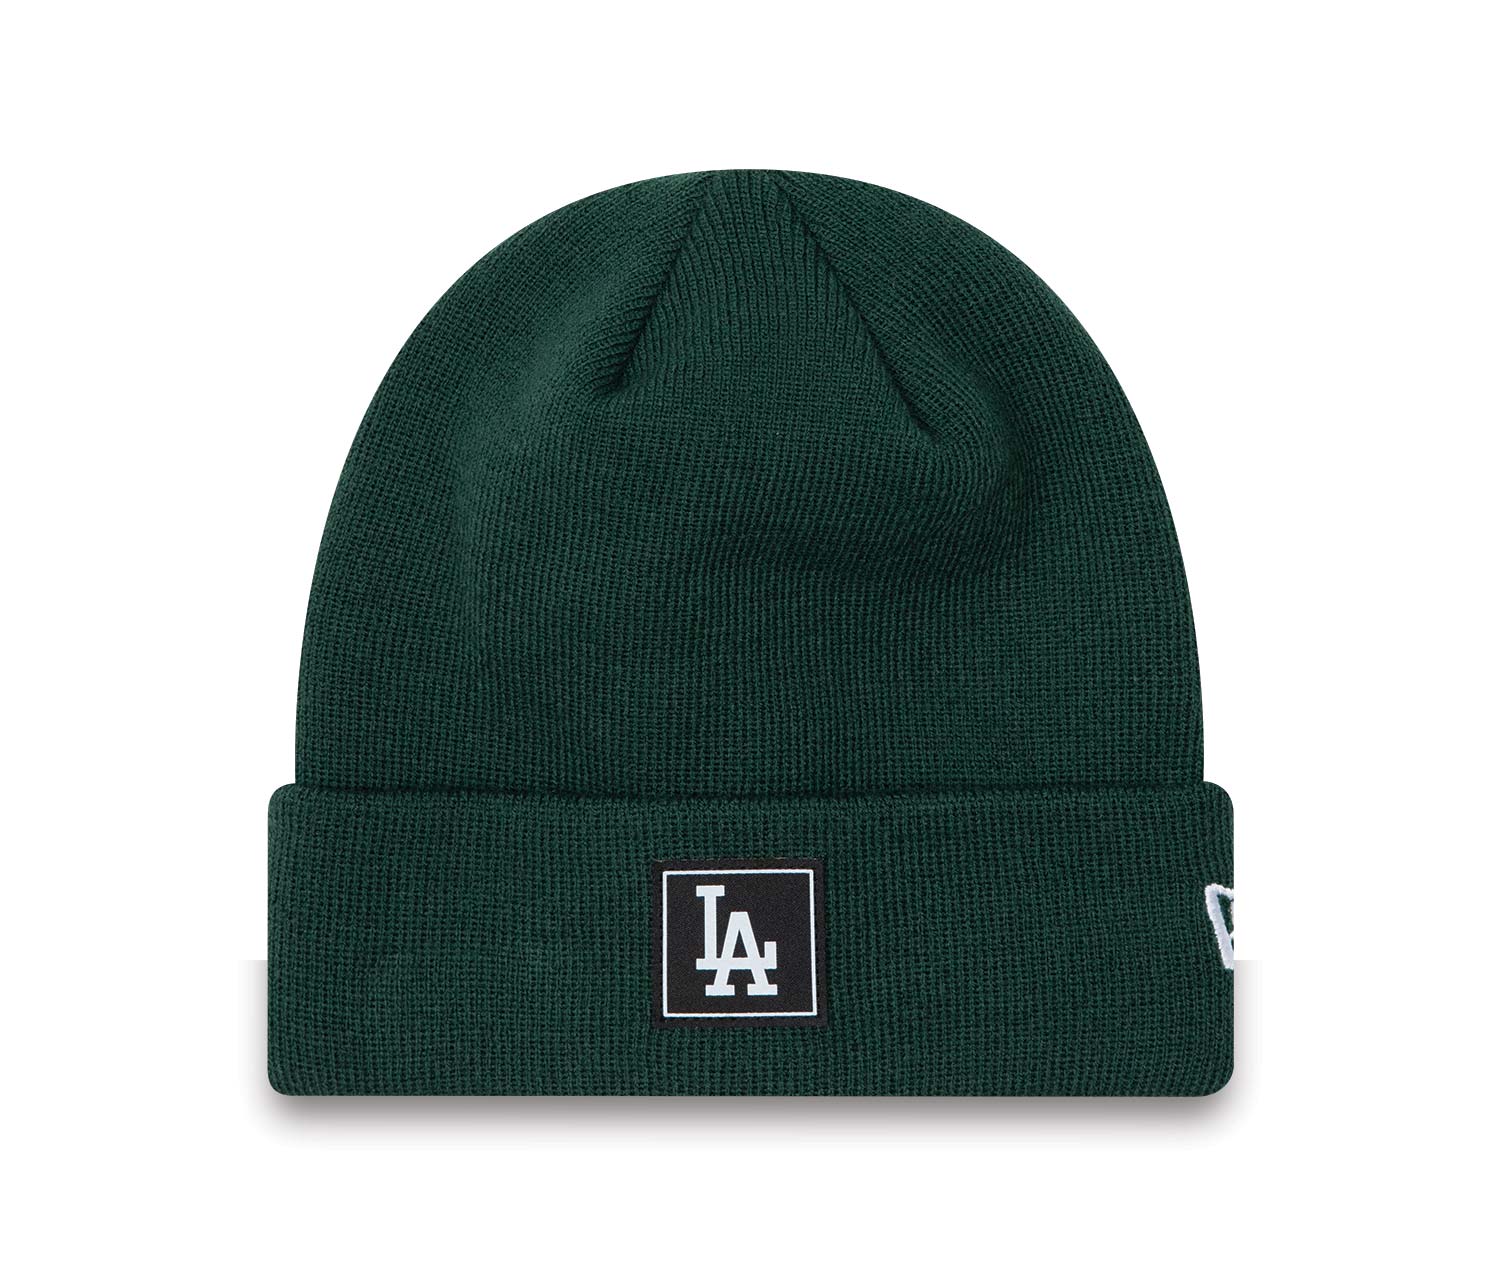 LA Dodgers Team Cuff Dark Green Beanie Hat